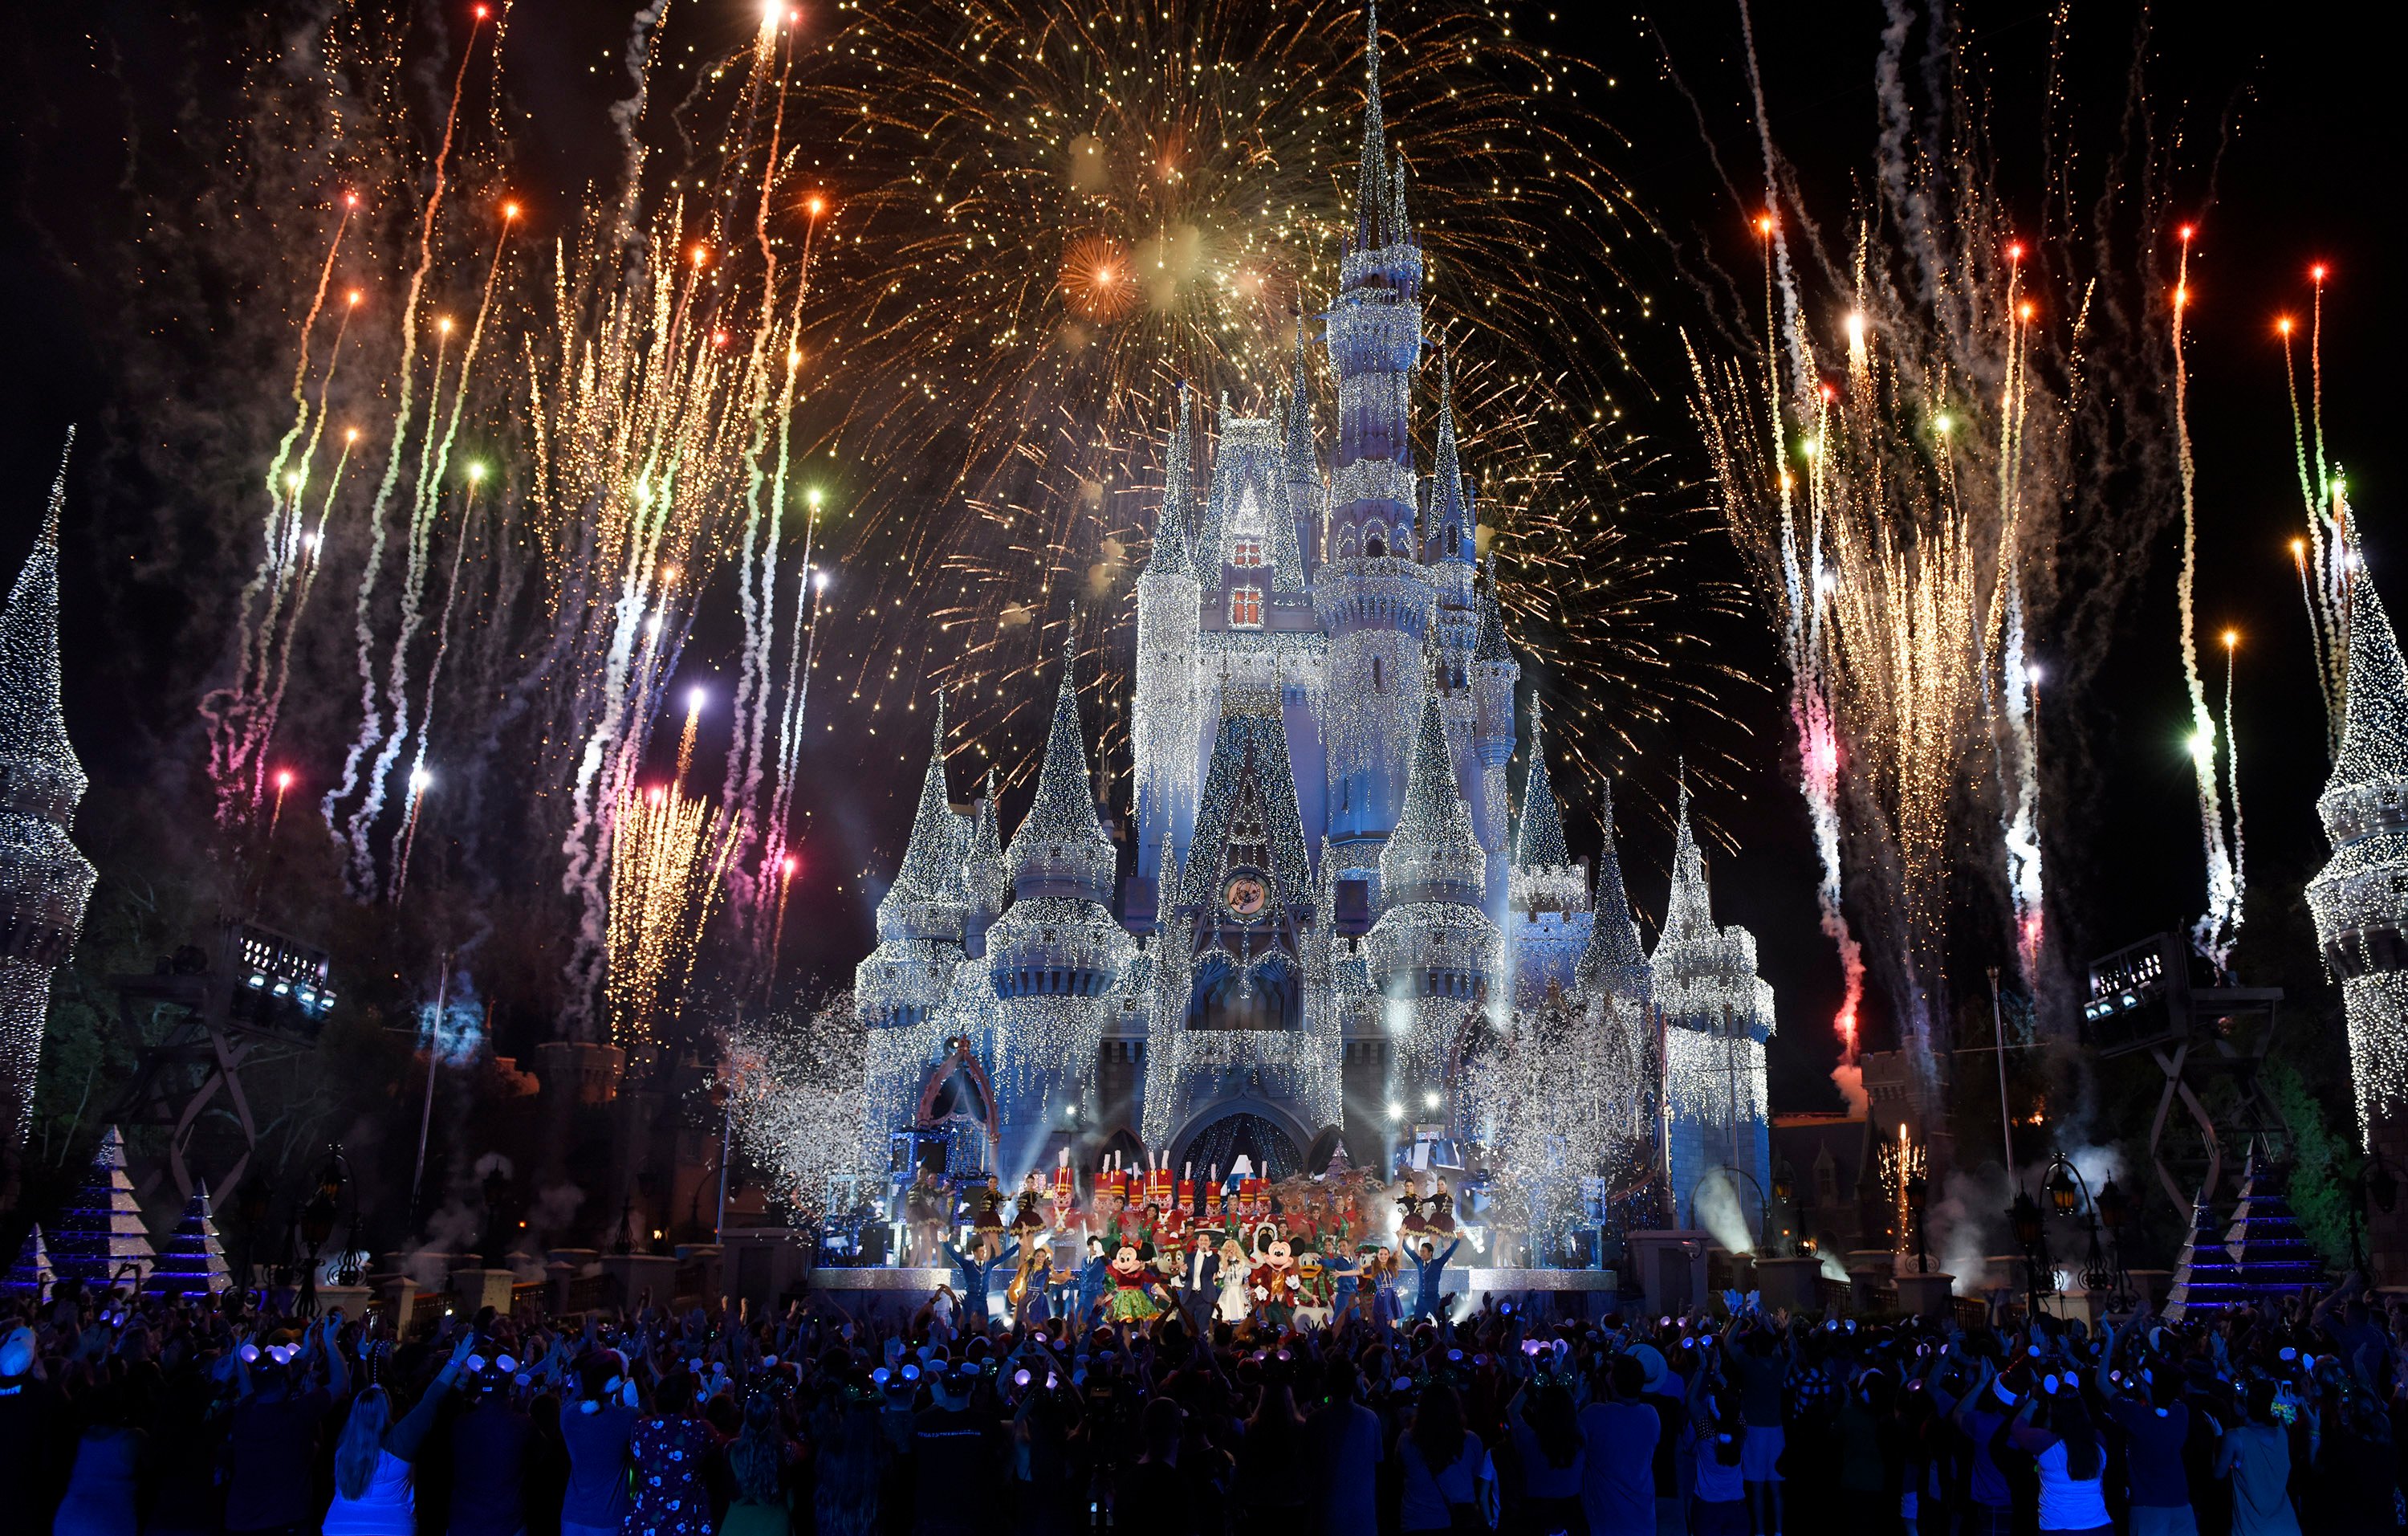 The Cinderella Castle lit up